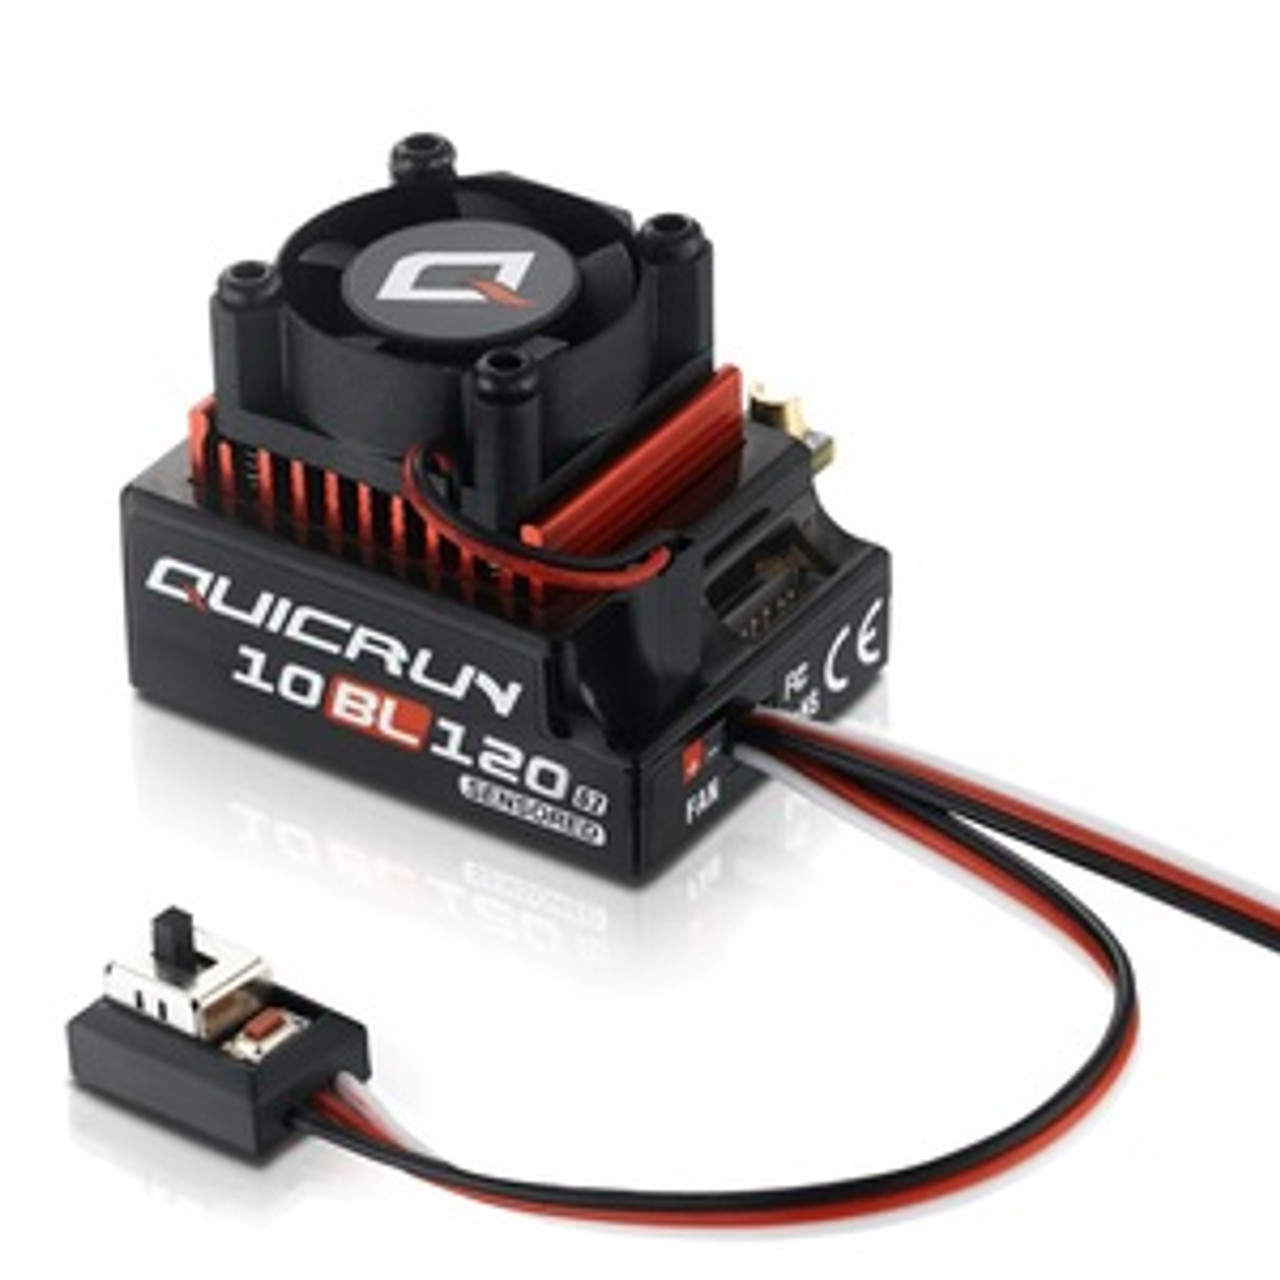 Hobbywing QUICRUN 10BL120 (G2) Sensored Brushless ESC for 1/10, 120A / 760A